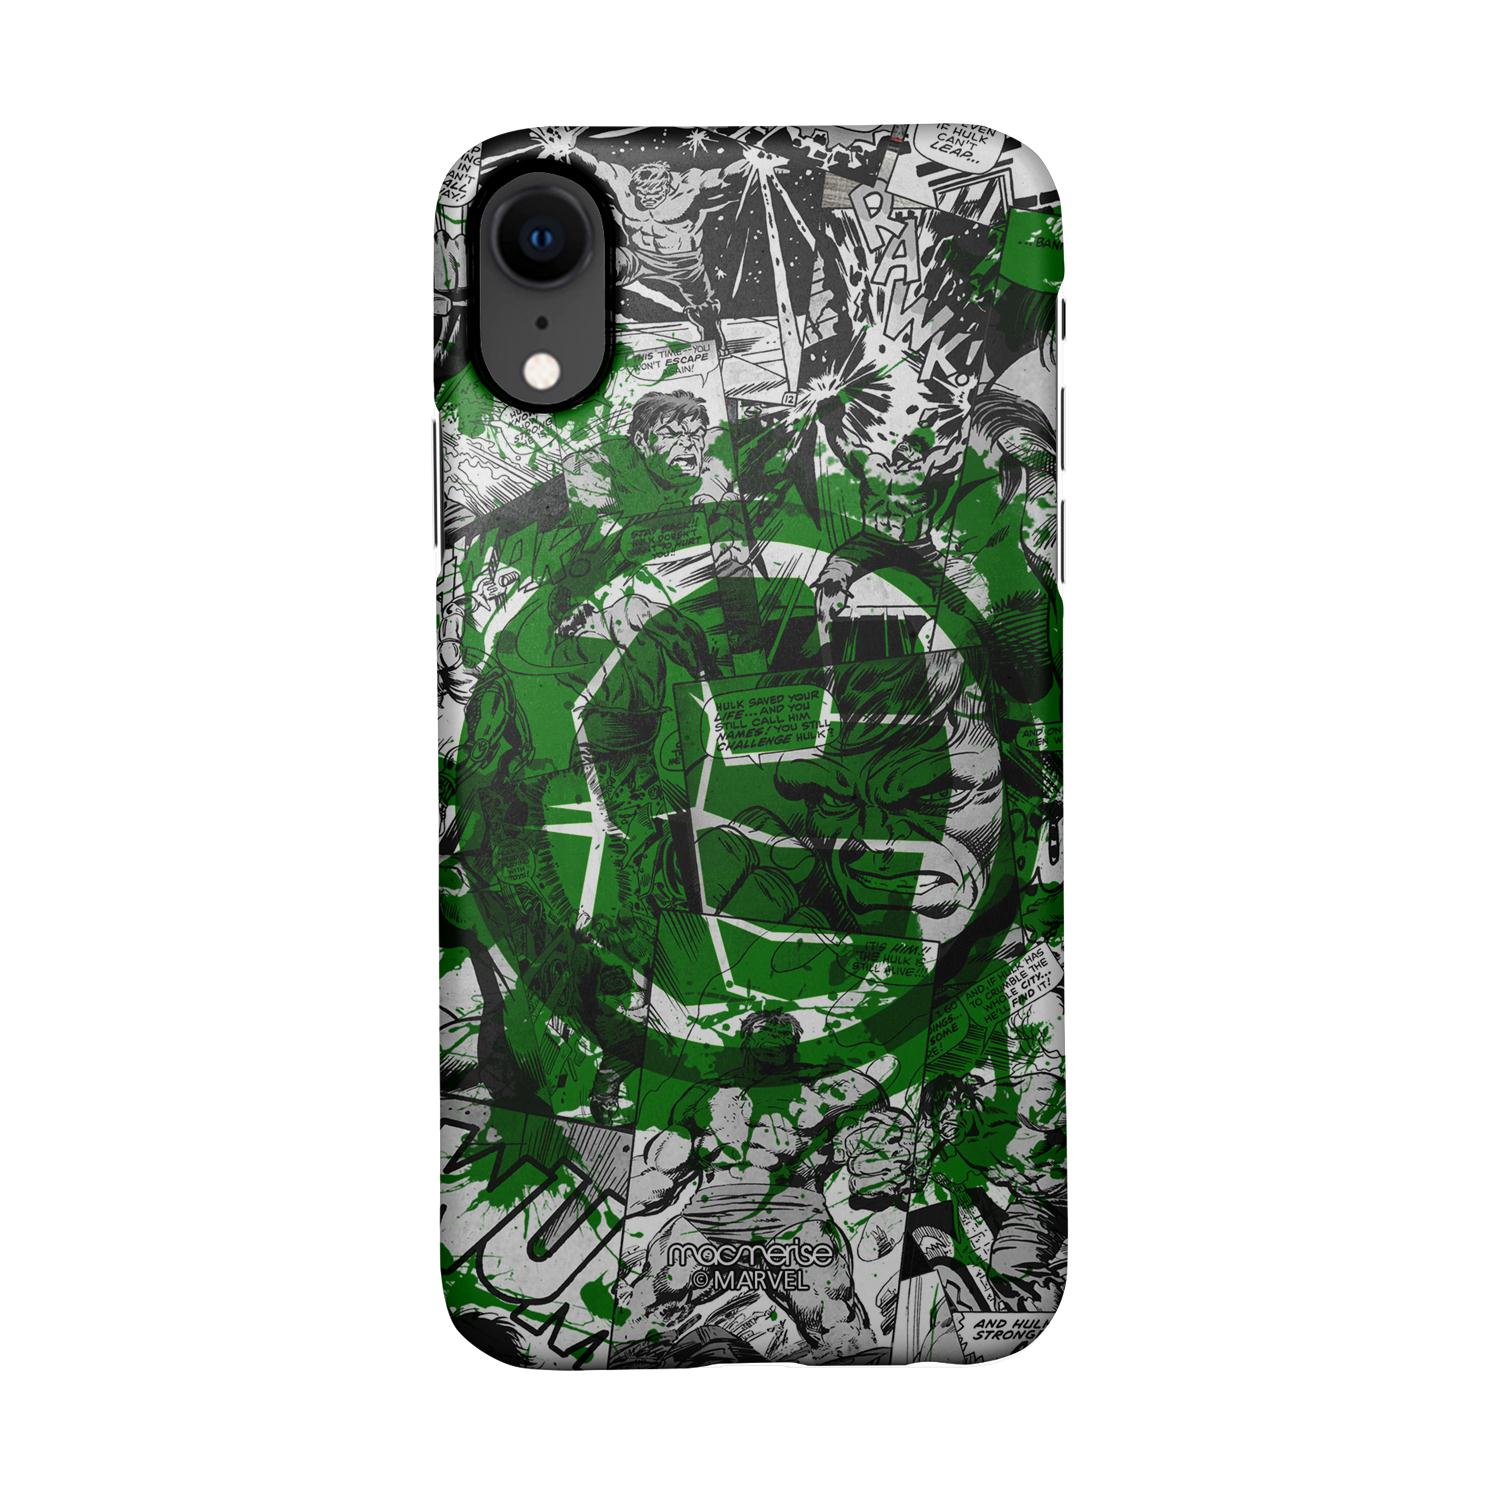 Buy Splash Out Hulk Fist - Sleek Phone Case for iPhone XR Online